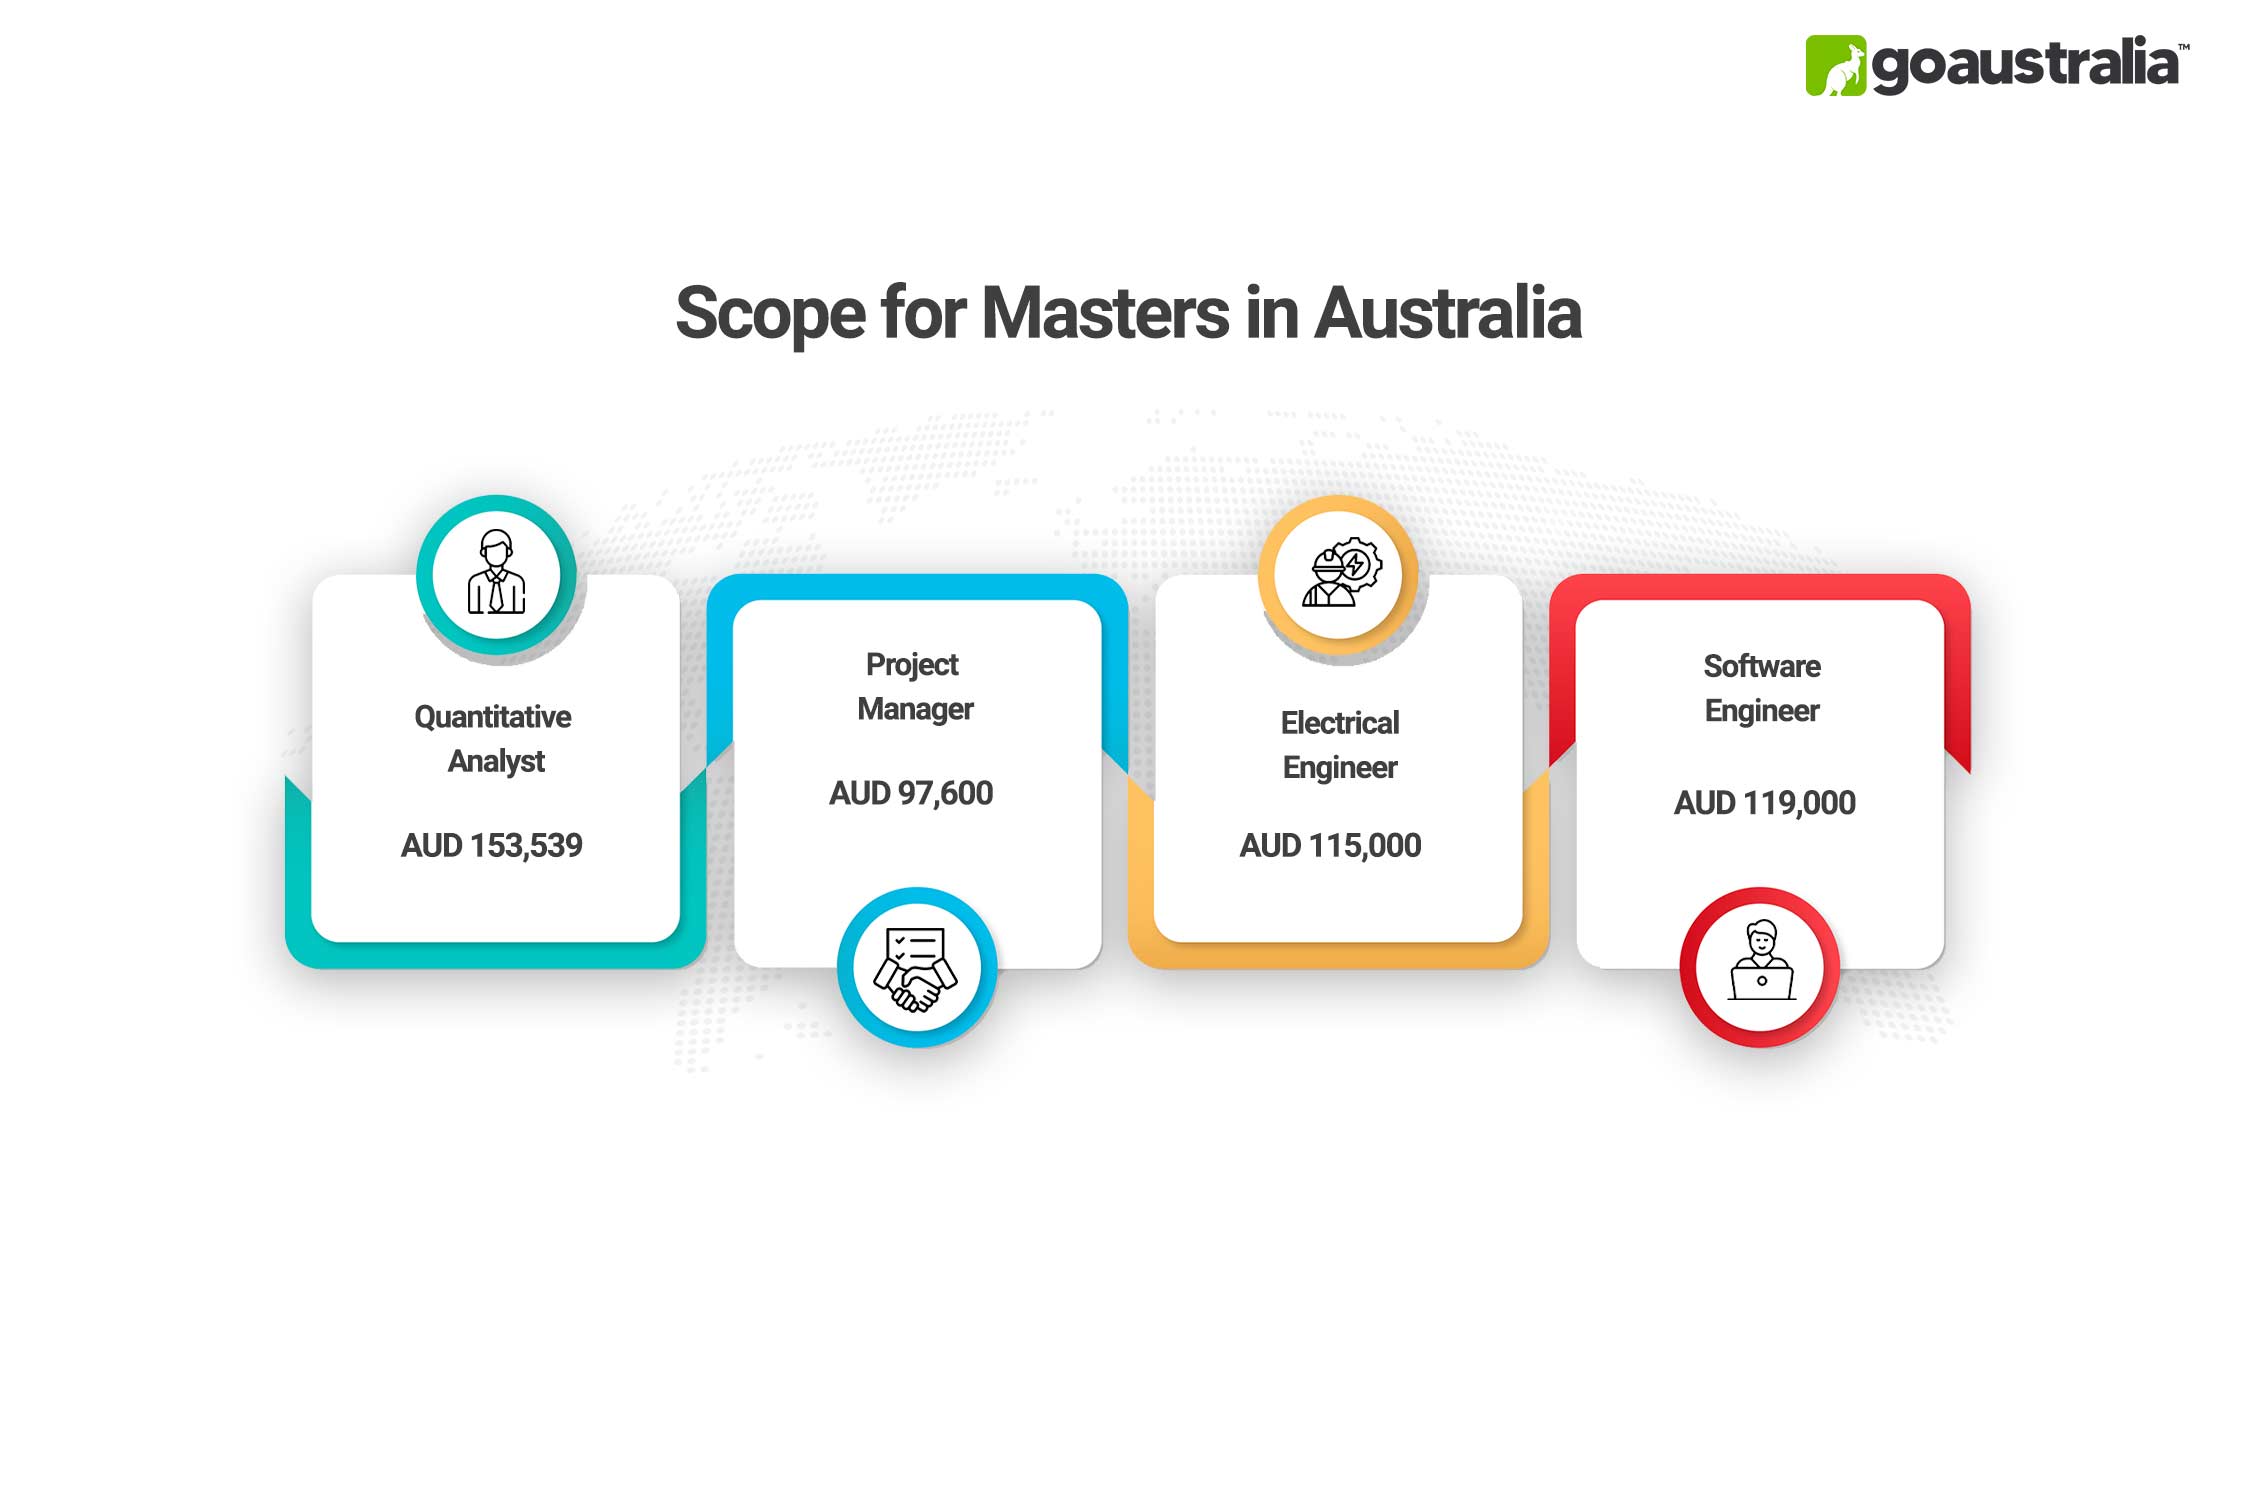 Masters in Australia Scope